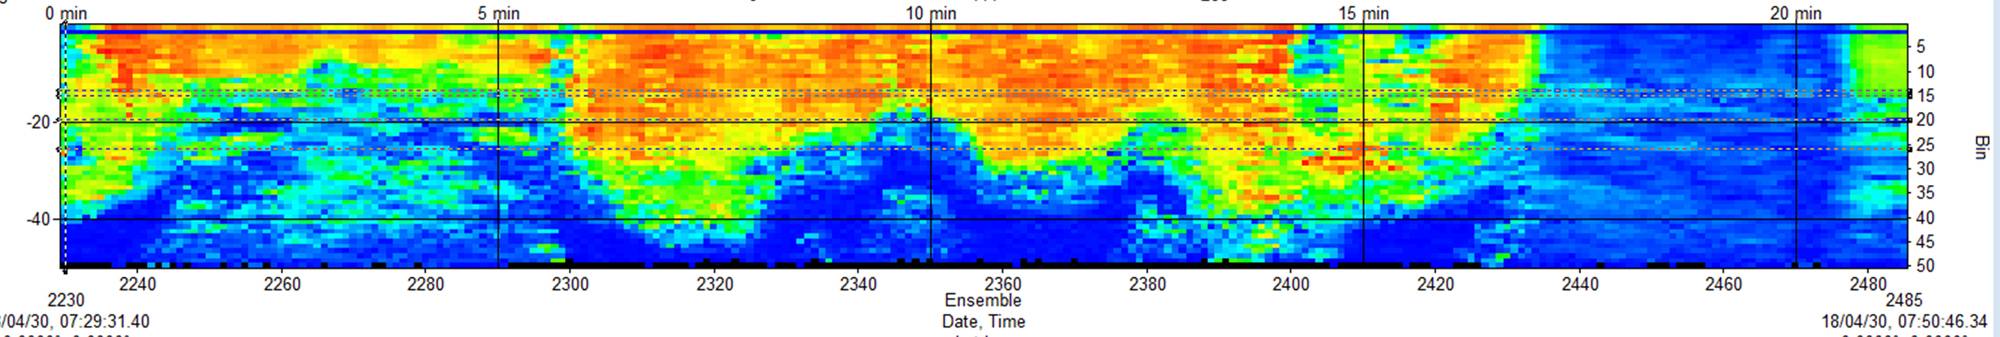 Islay Sound ADCP data. Imagen de MarynSol.